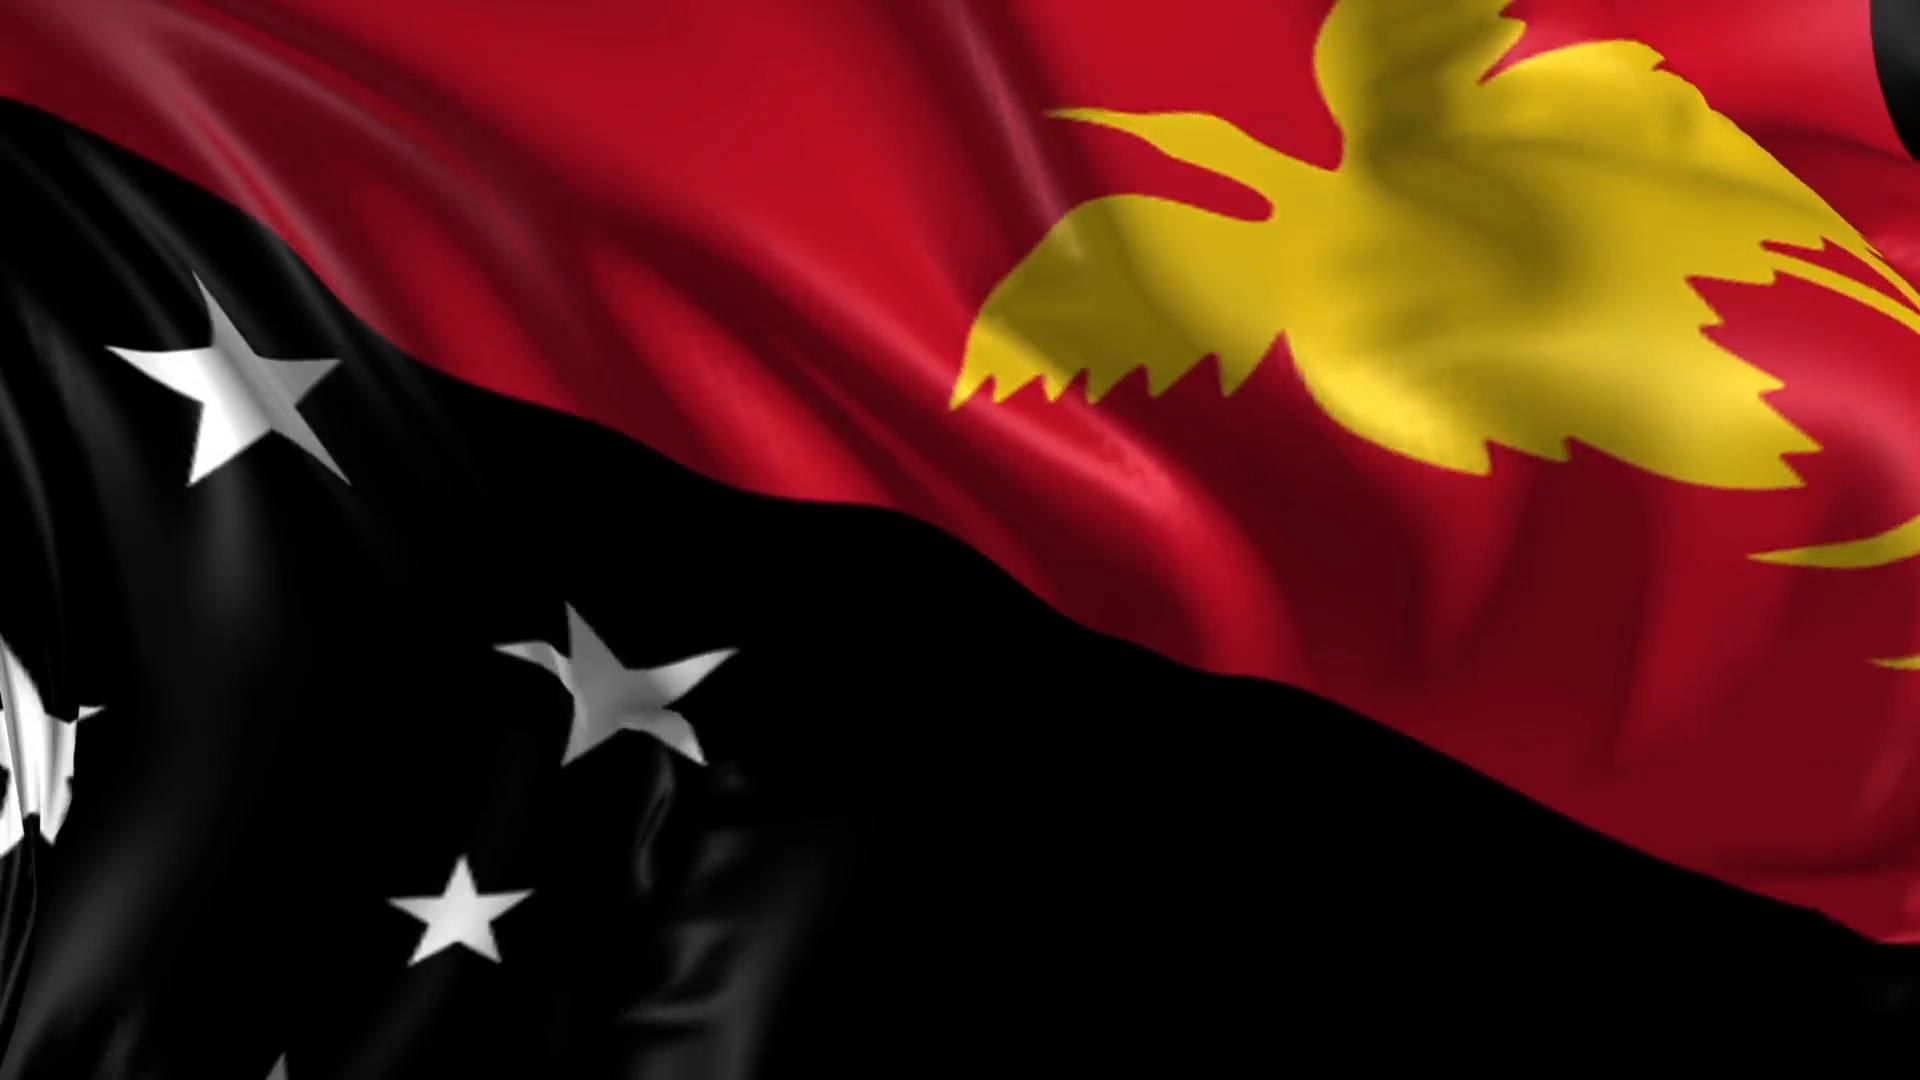 Papua New Guinea Country Flag